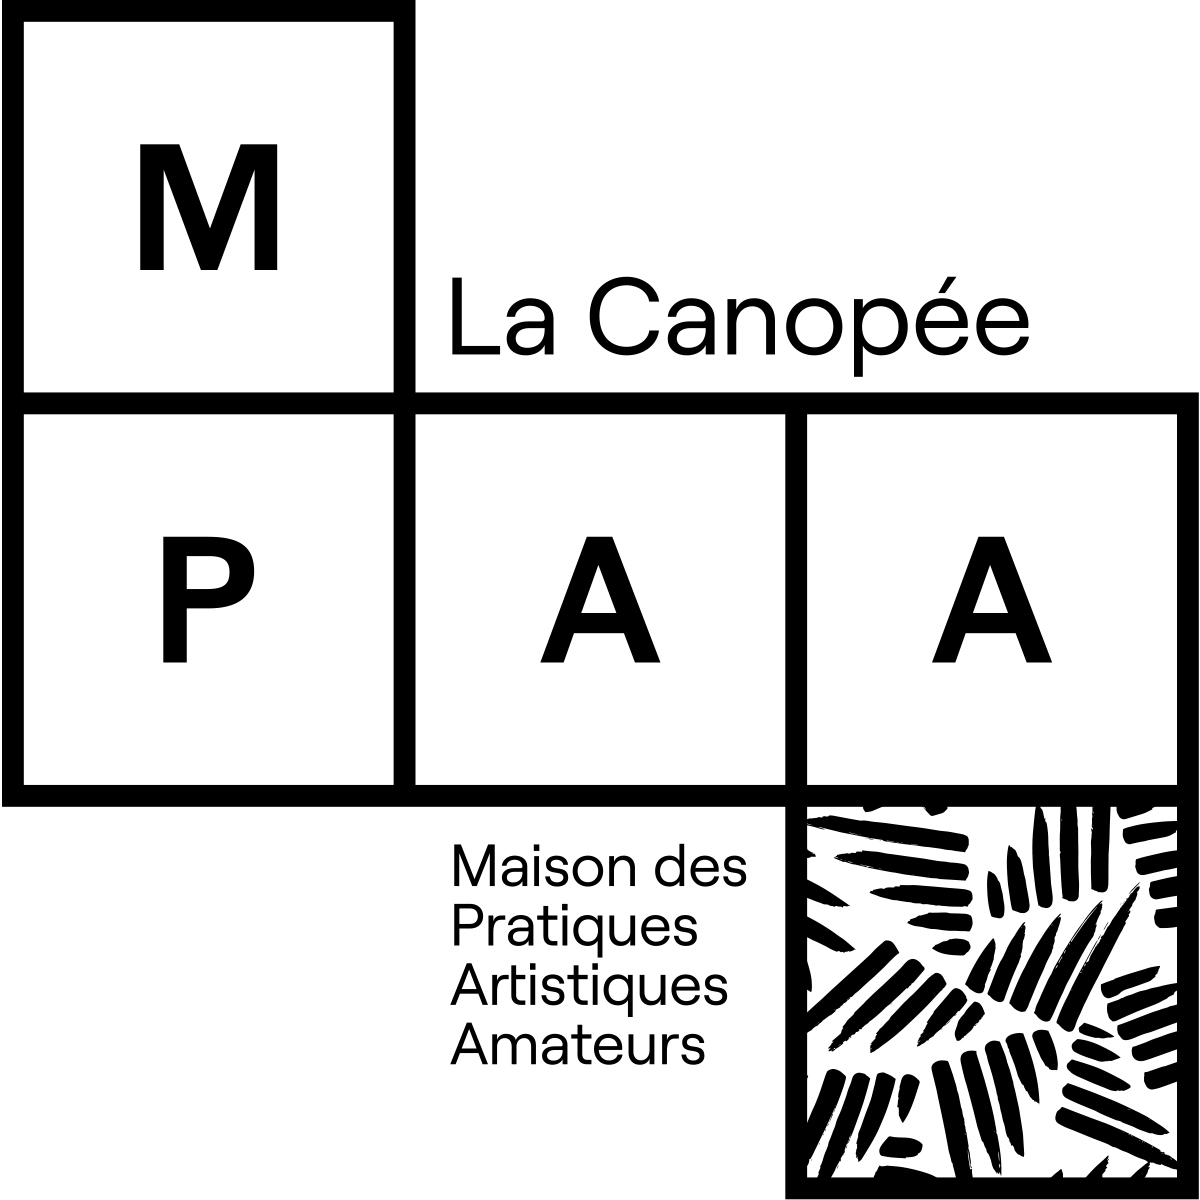 MPAA Canopée